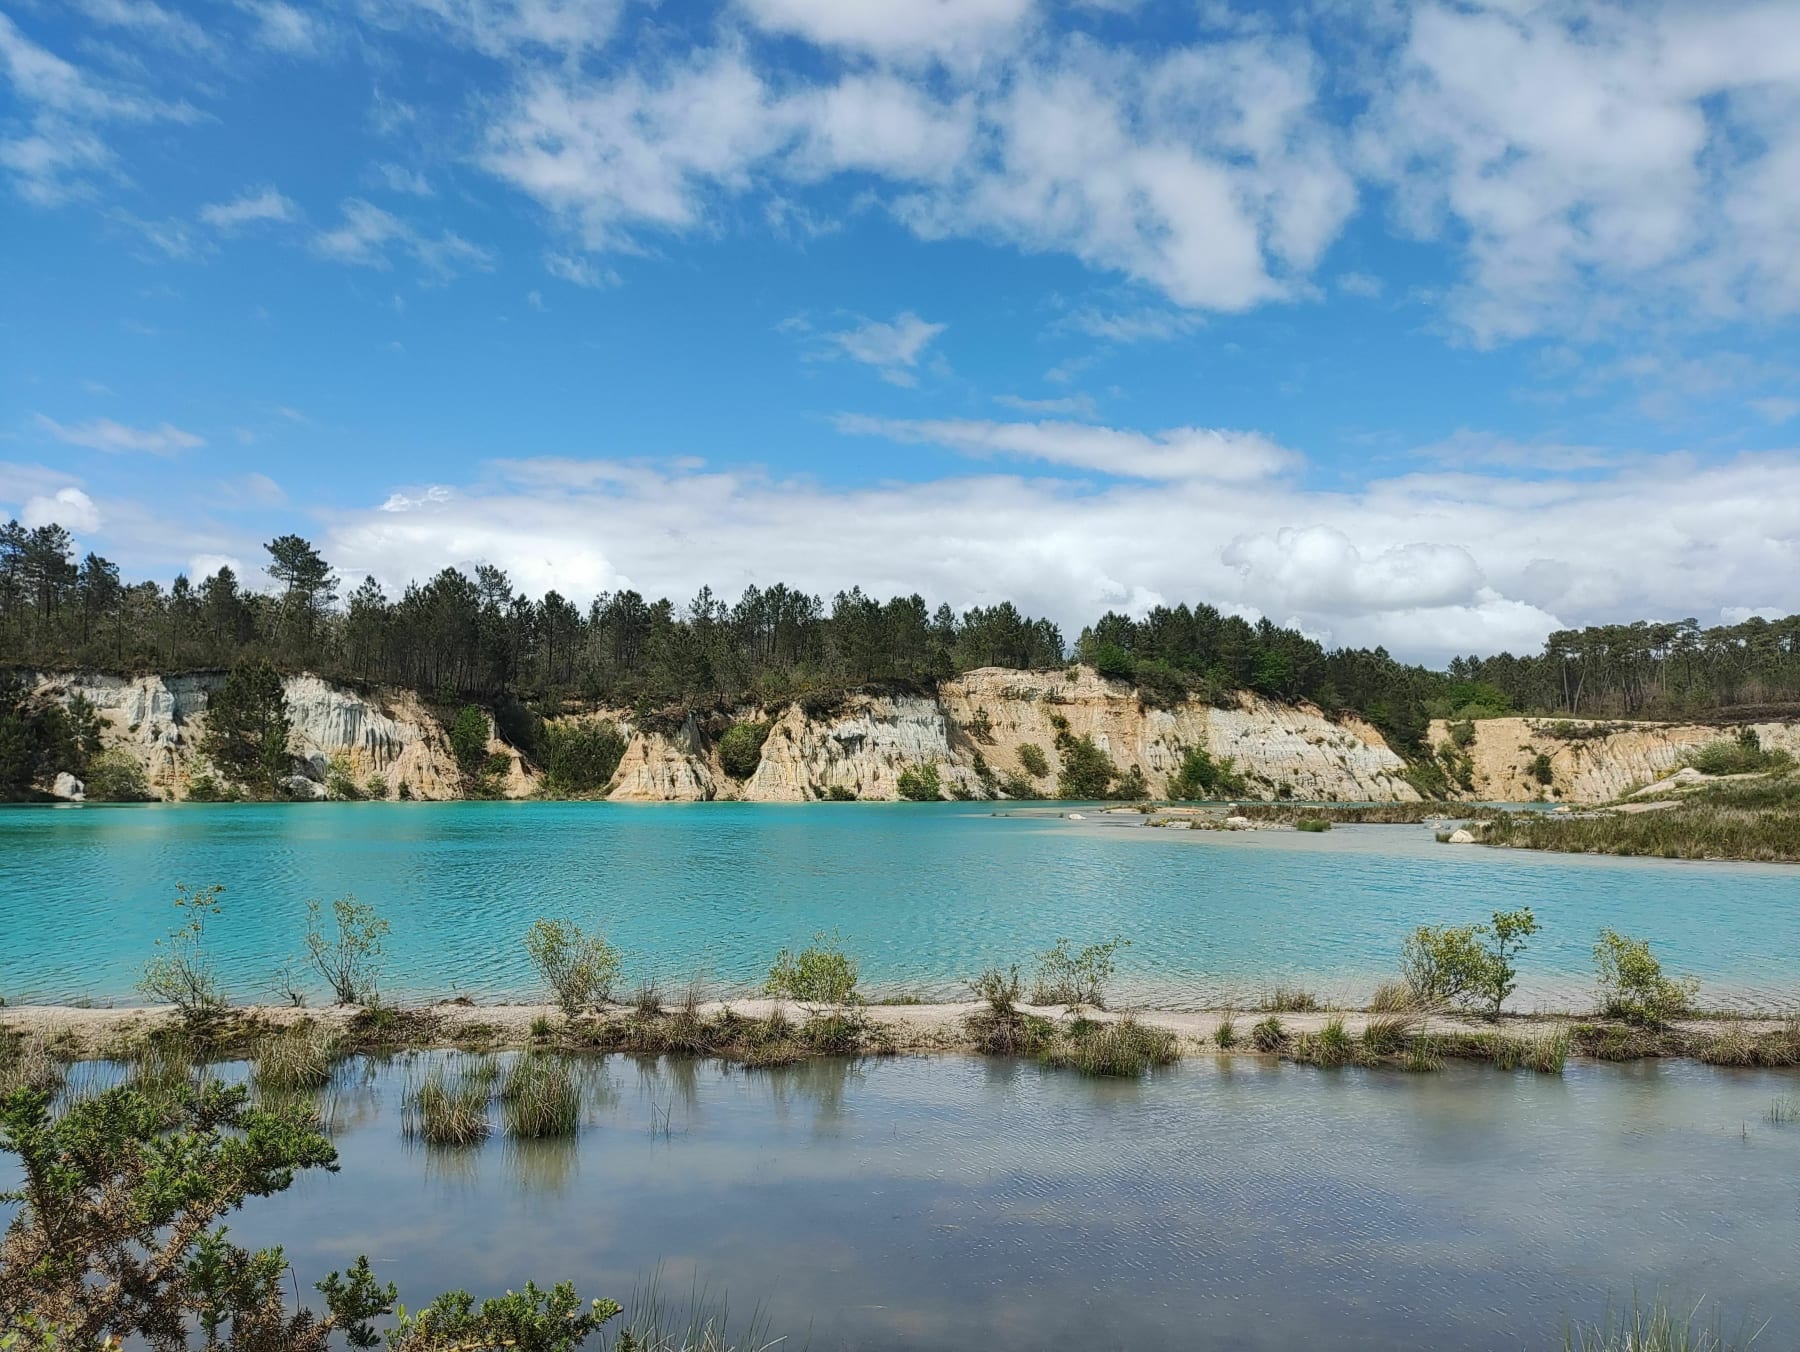 Randonnée Guizengeard - Lacs bleus de Guizengeard